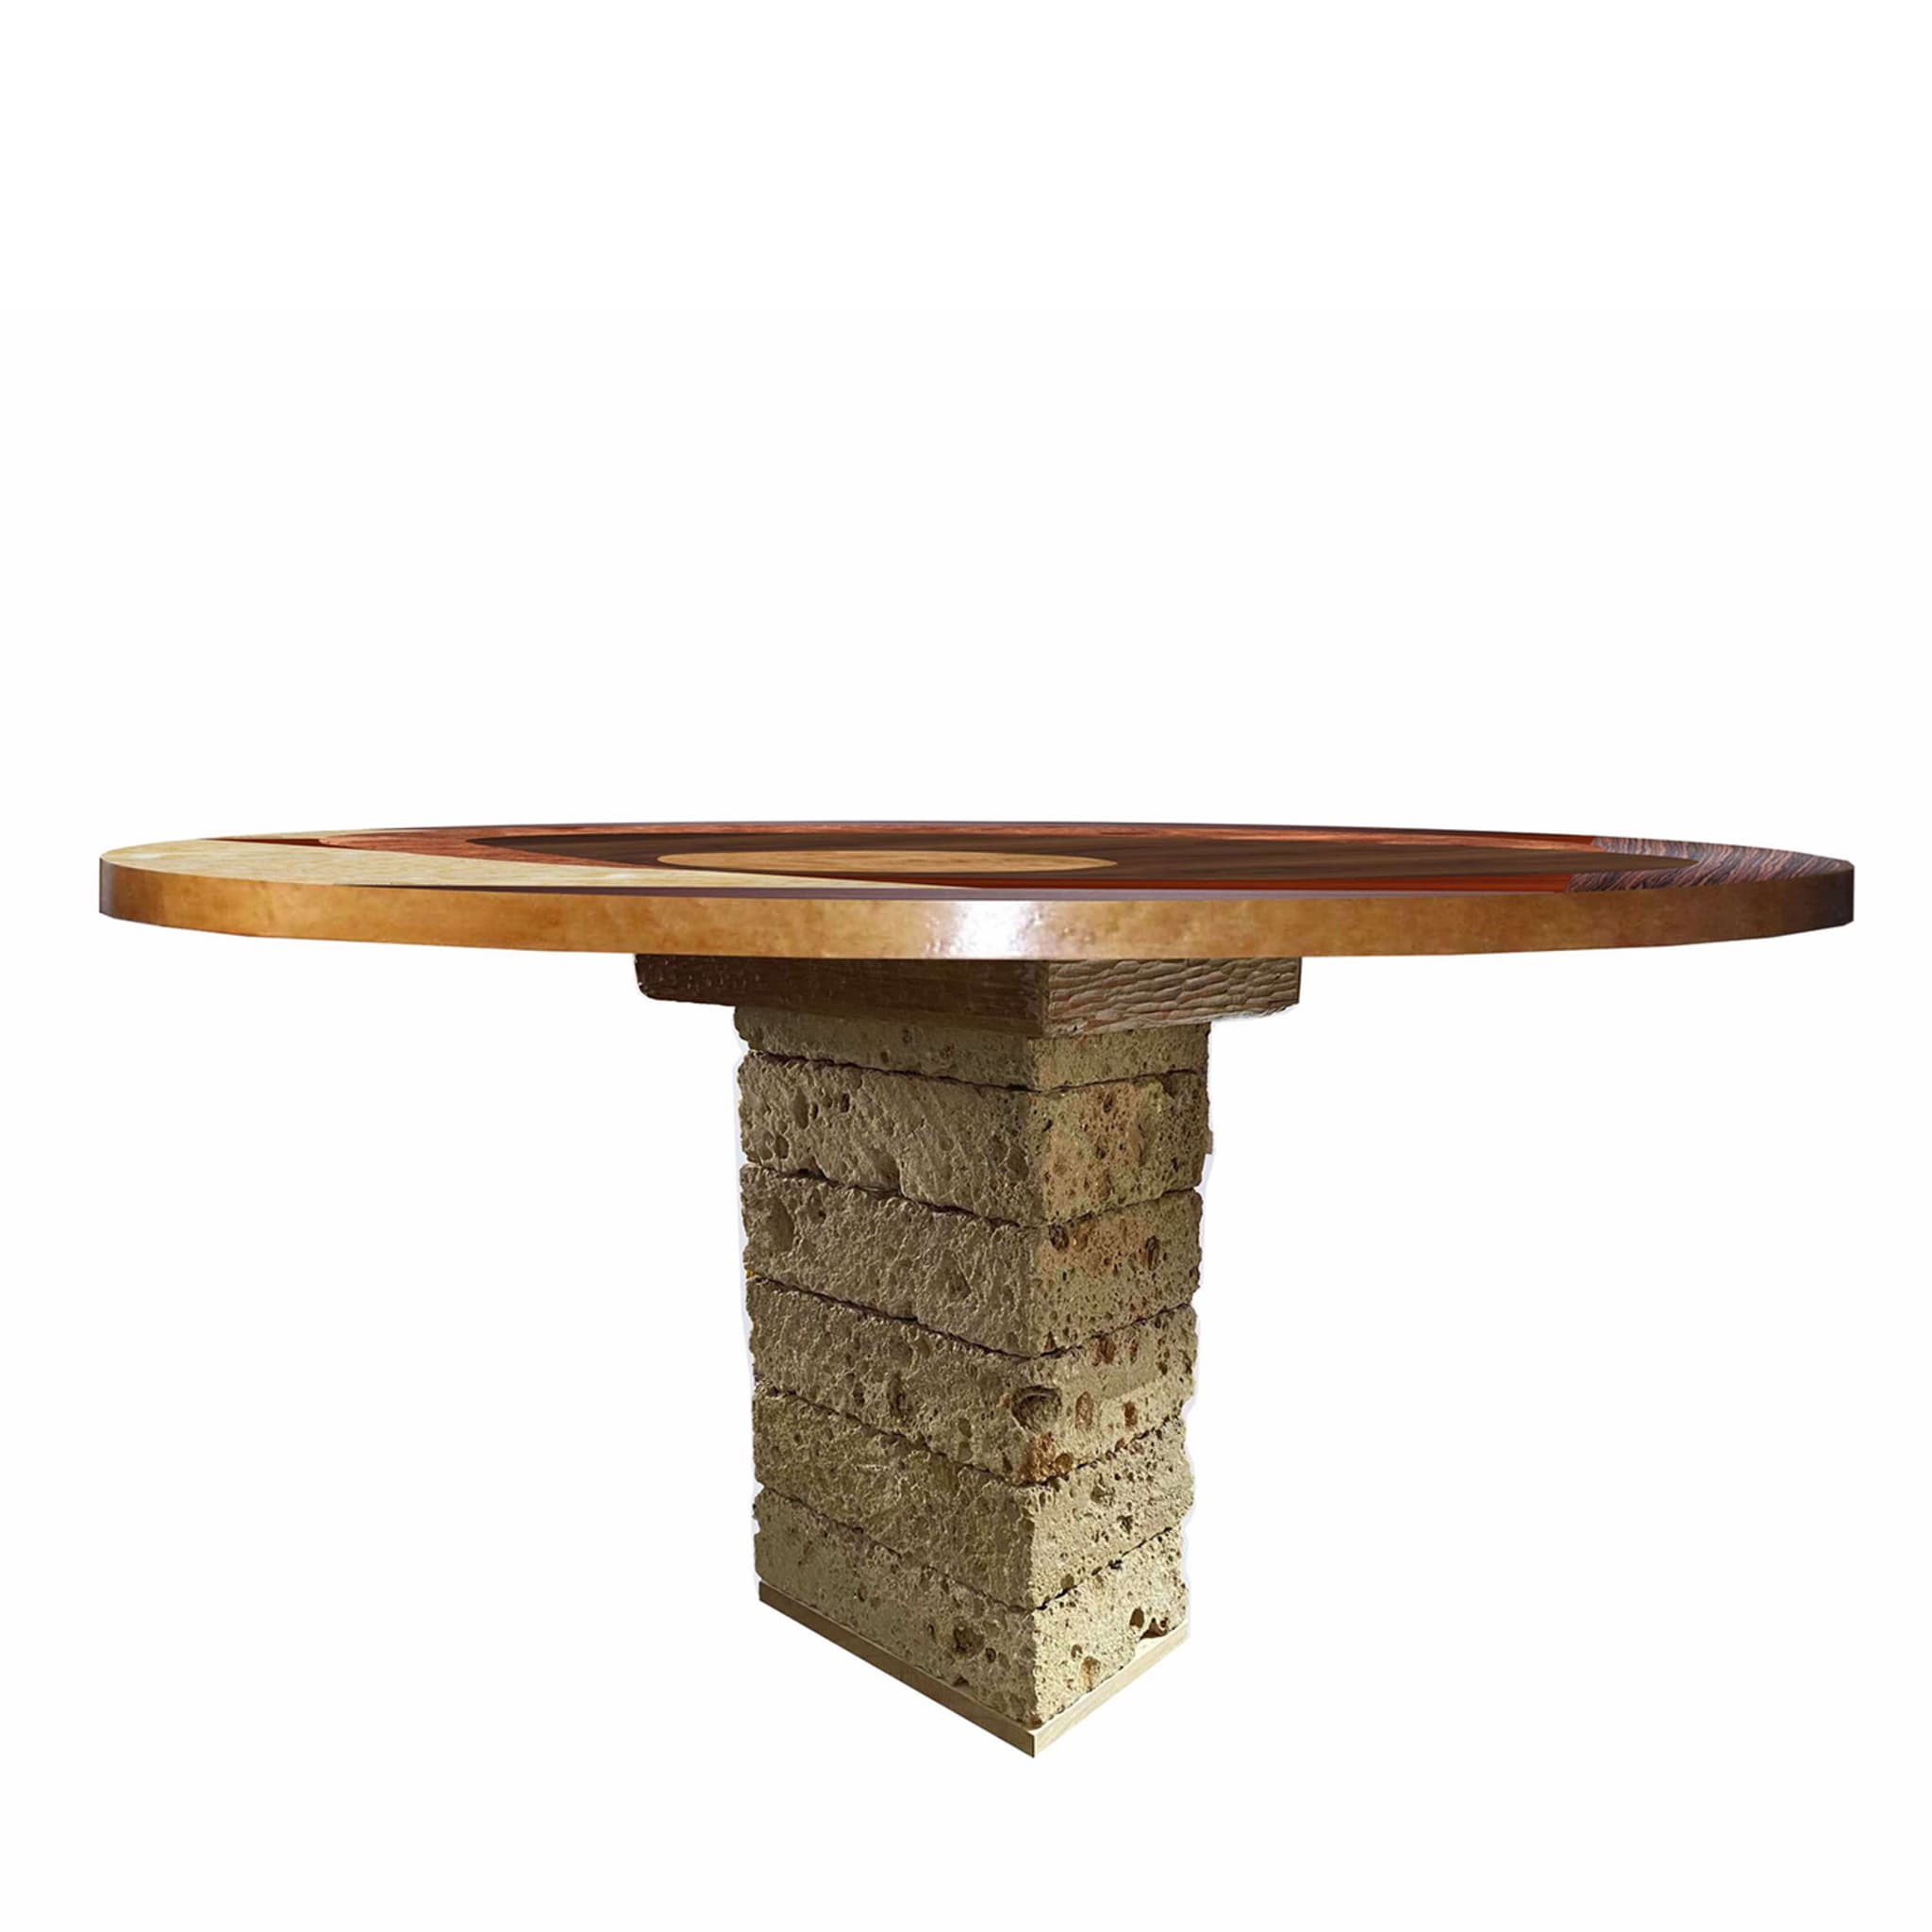 Tarsia Tables Tt5 Round Polychrome Table by Mascia Meccani - Alternative view 2